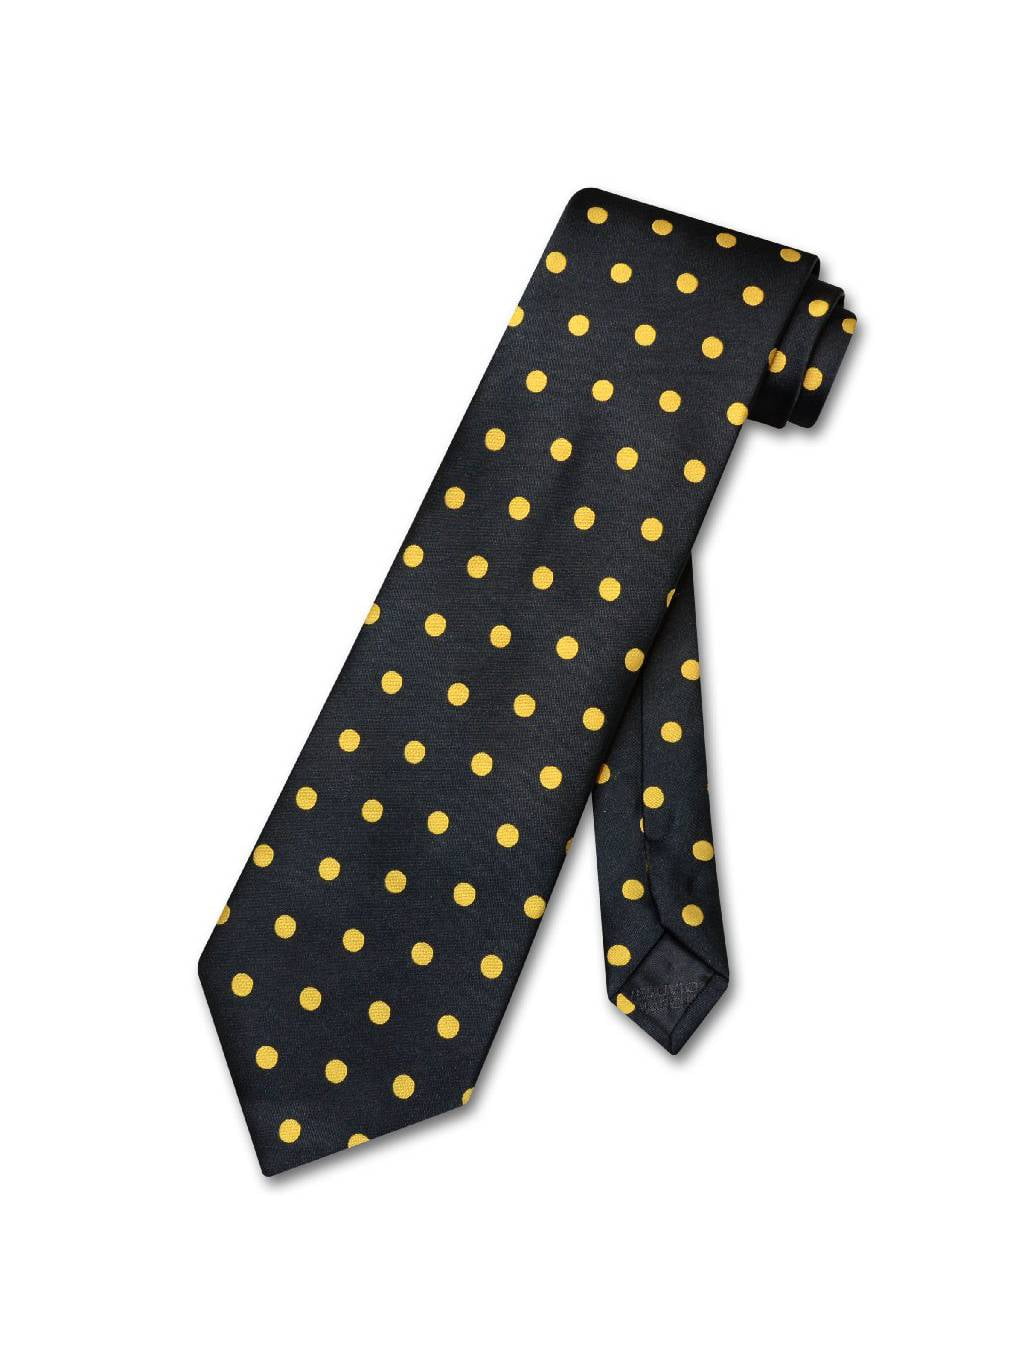 Vesuvio Napoli NeckTie WHITE with BLACK Polka Dots Design Mens Neck Tie